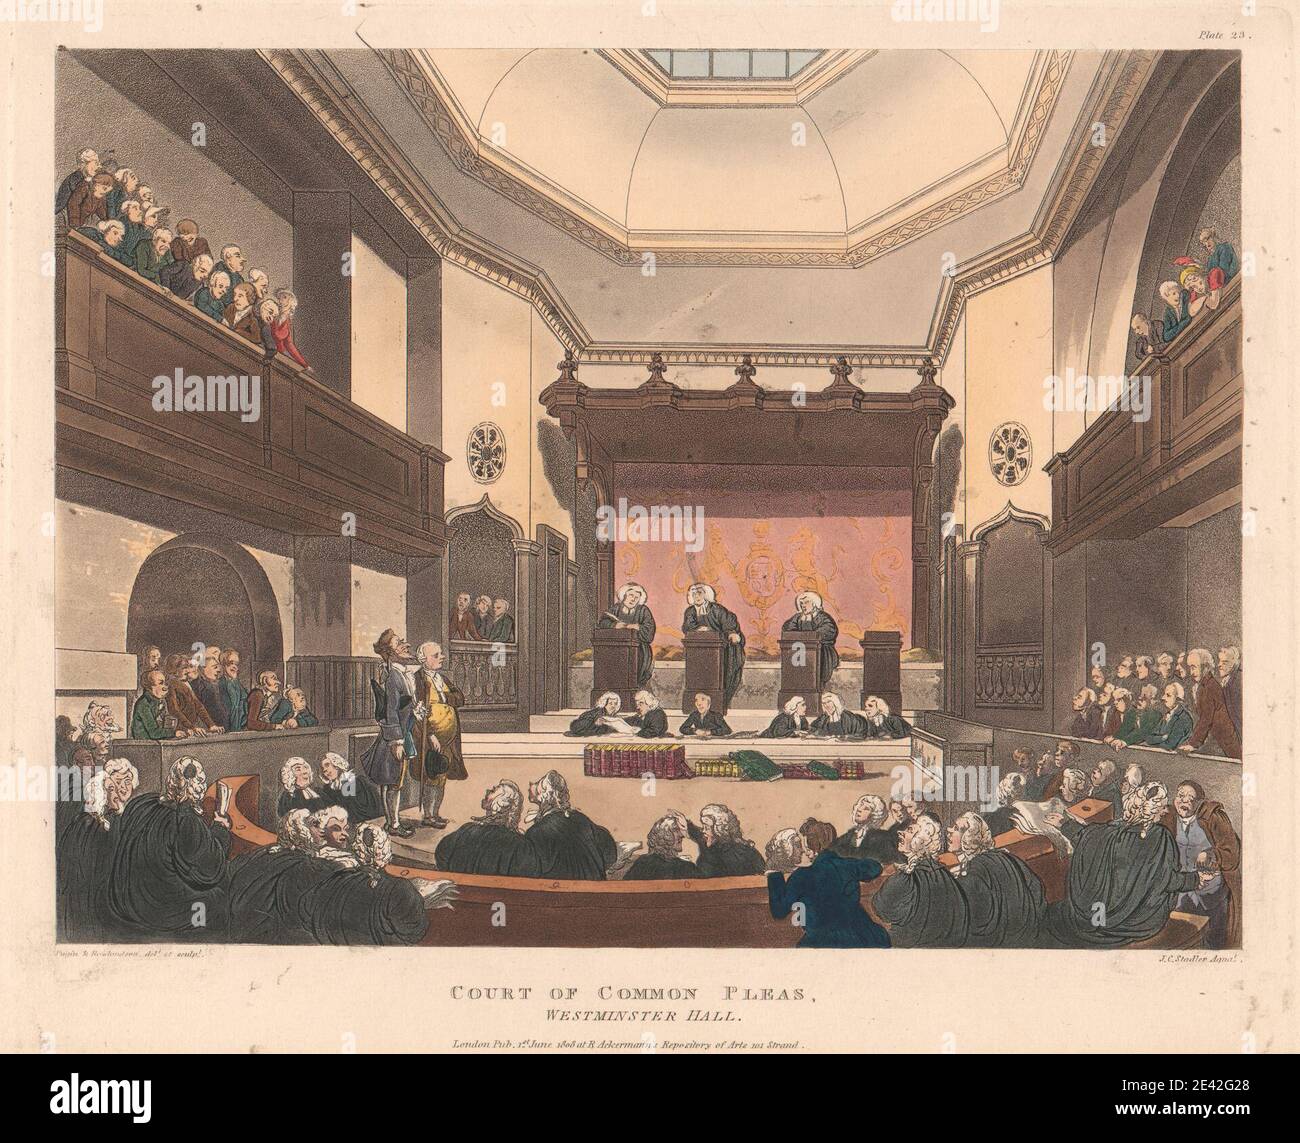 Joseph Constantine Stadler, active 1780â€“1812, British, Court of Common Pleas, Westminster Hall. Colored aquatint. Stock Photo